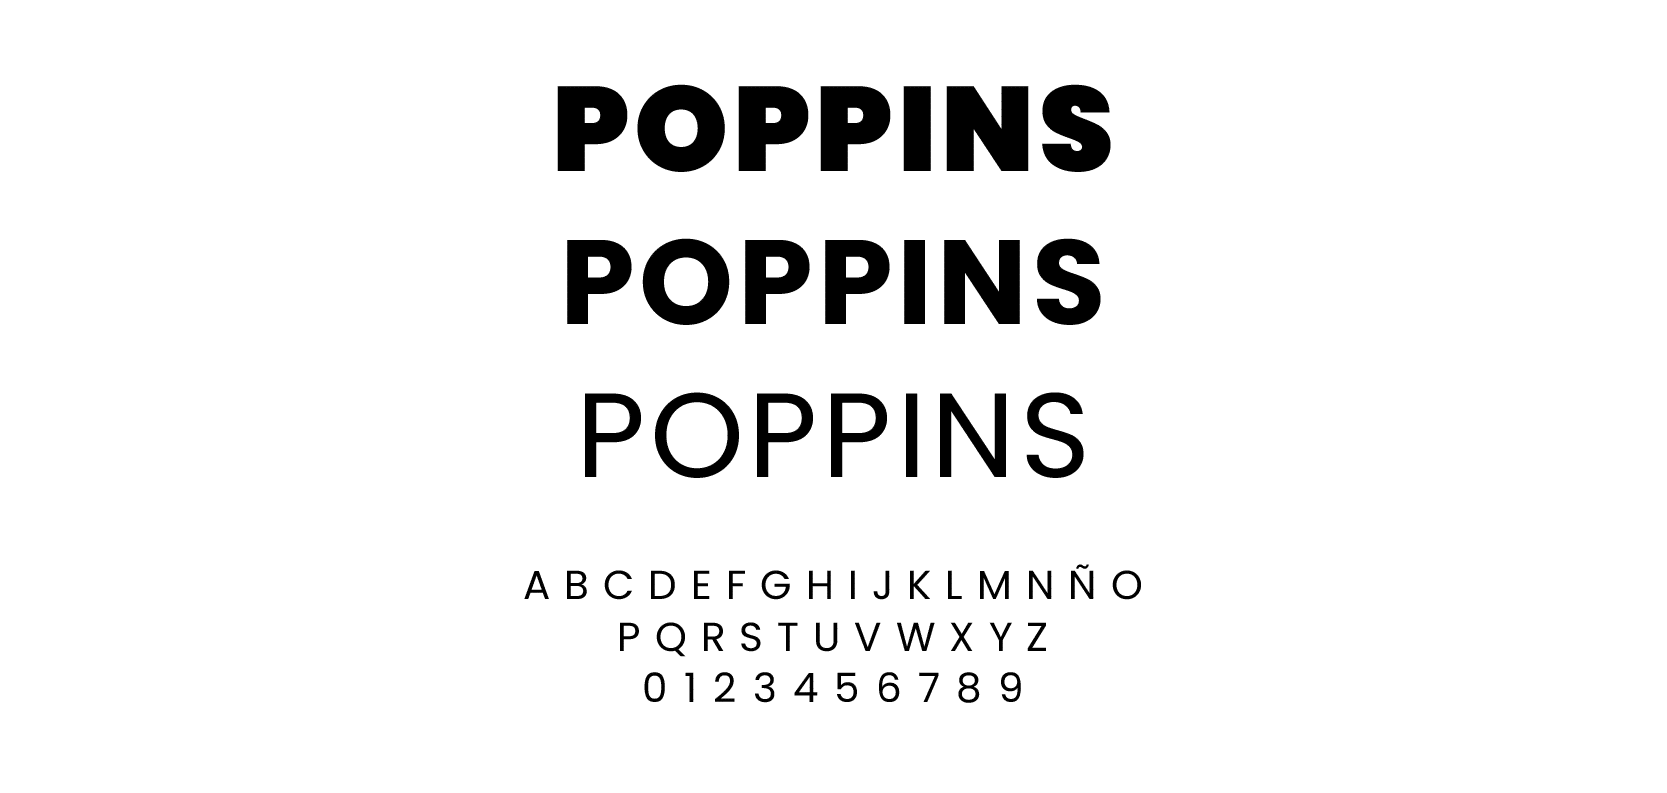 Poppins - Le journal Du Marketing